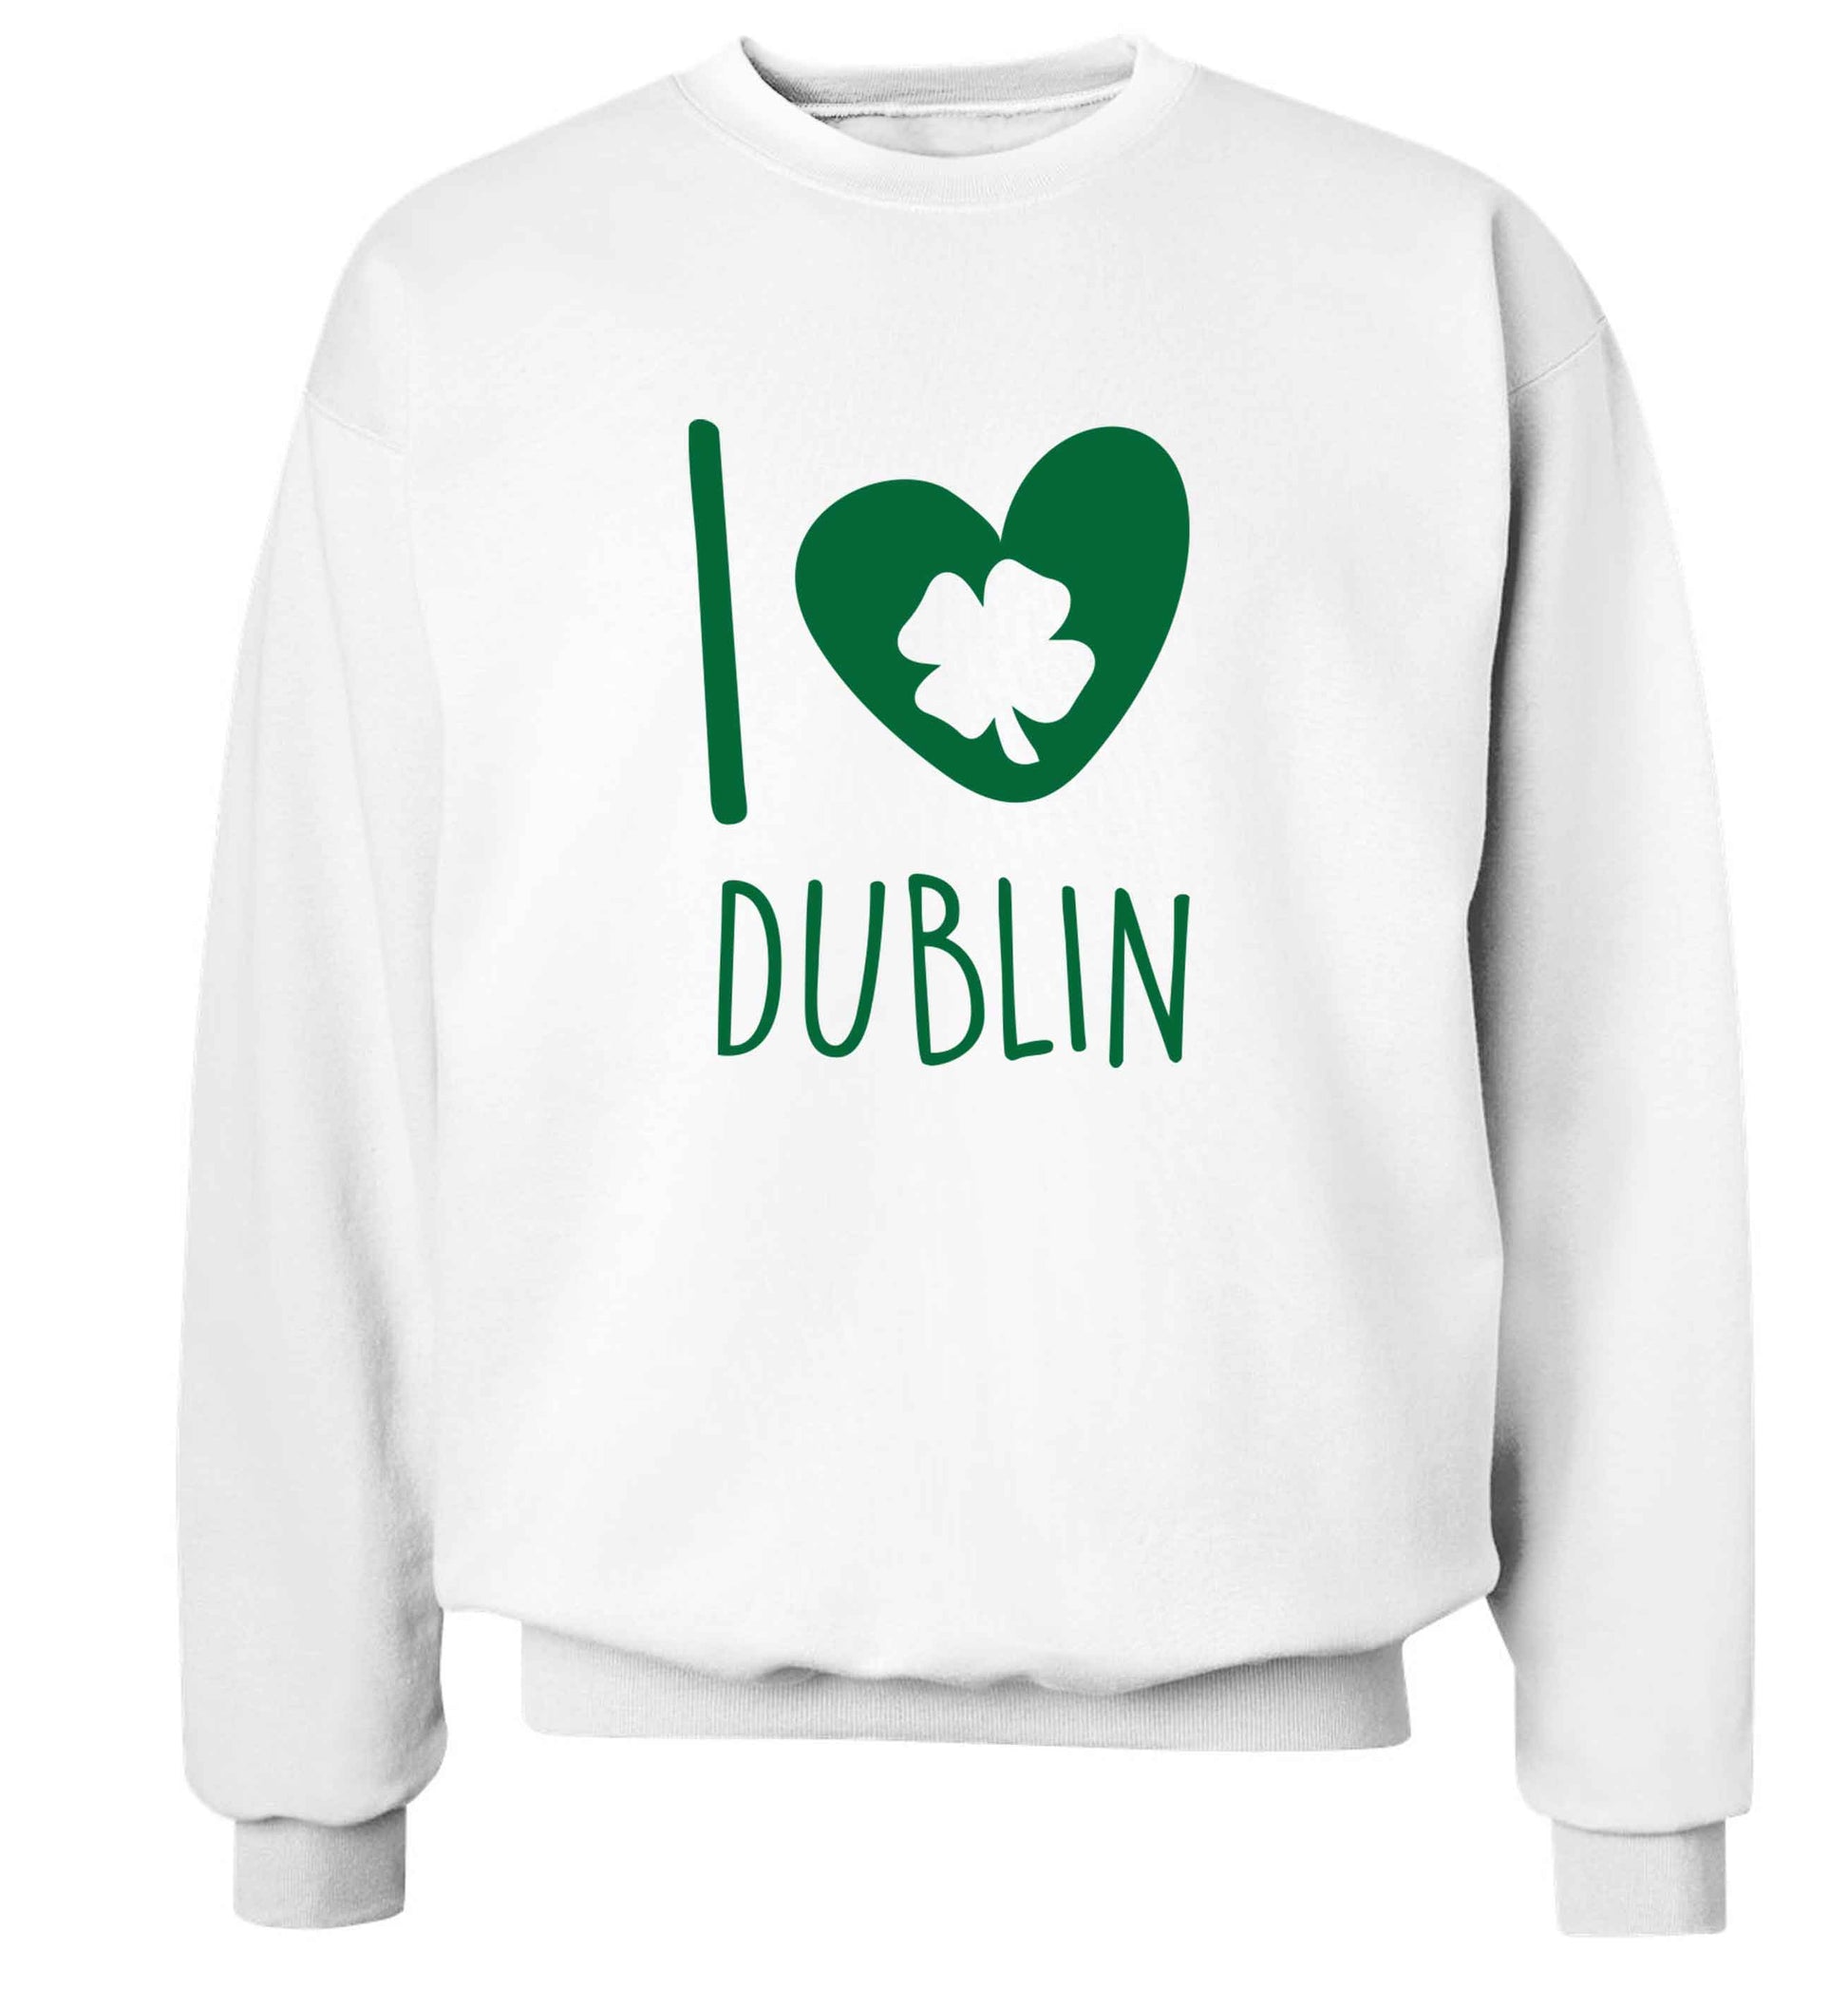 I love Dublin adult's unisex white sweater 2XL